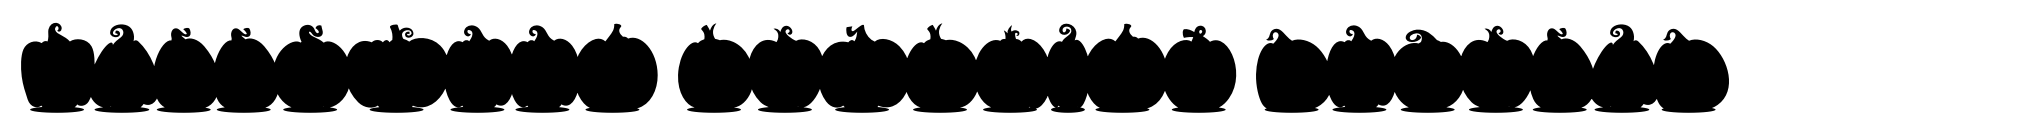 Halloween Pumpkins Regular image